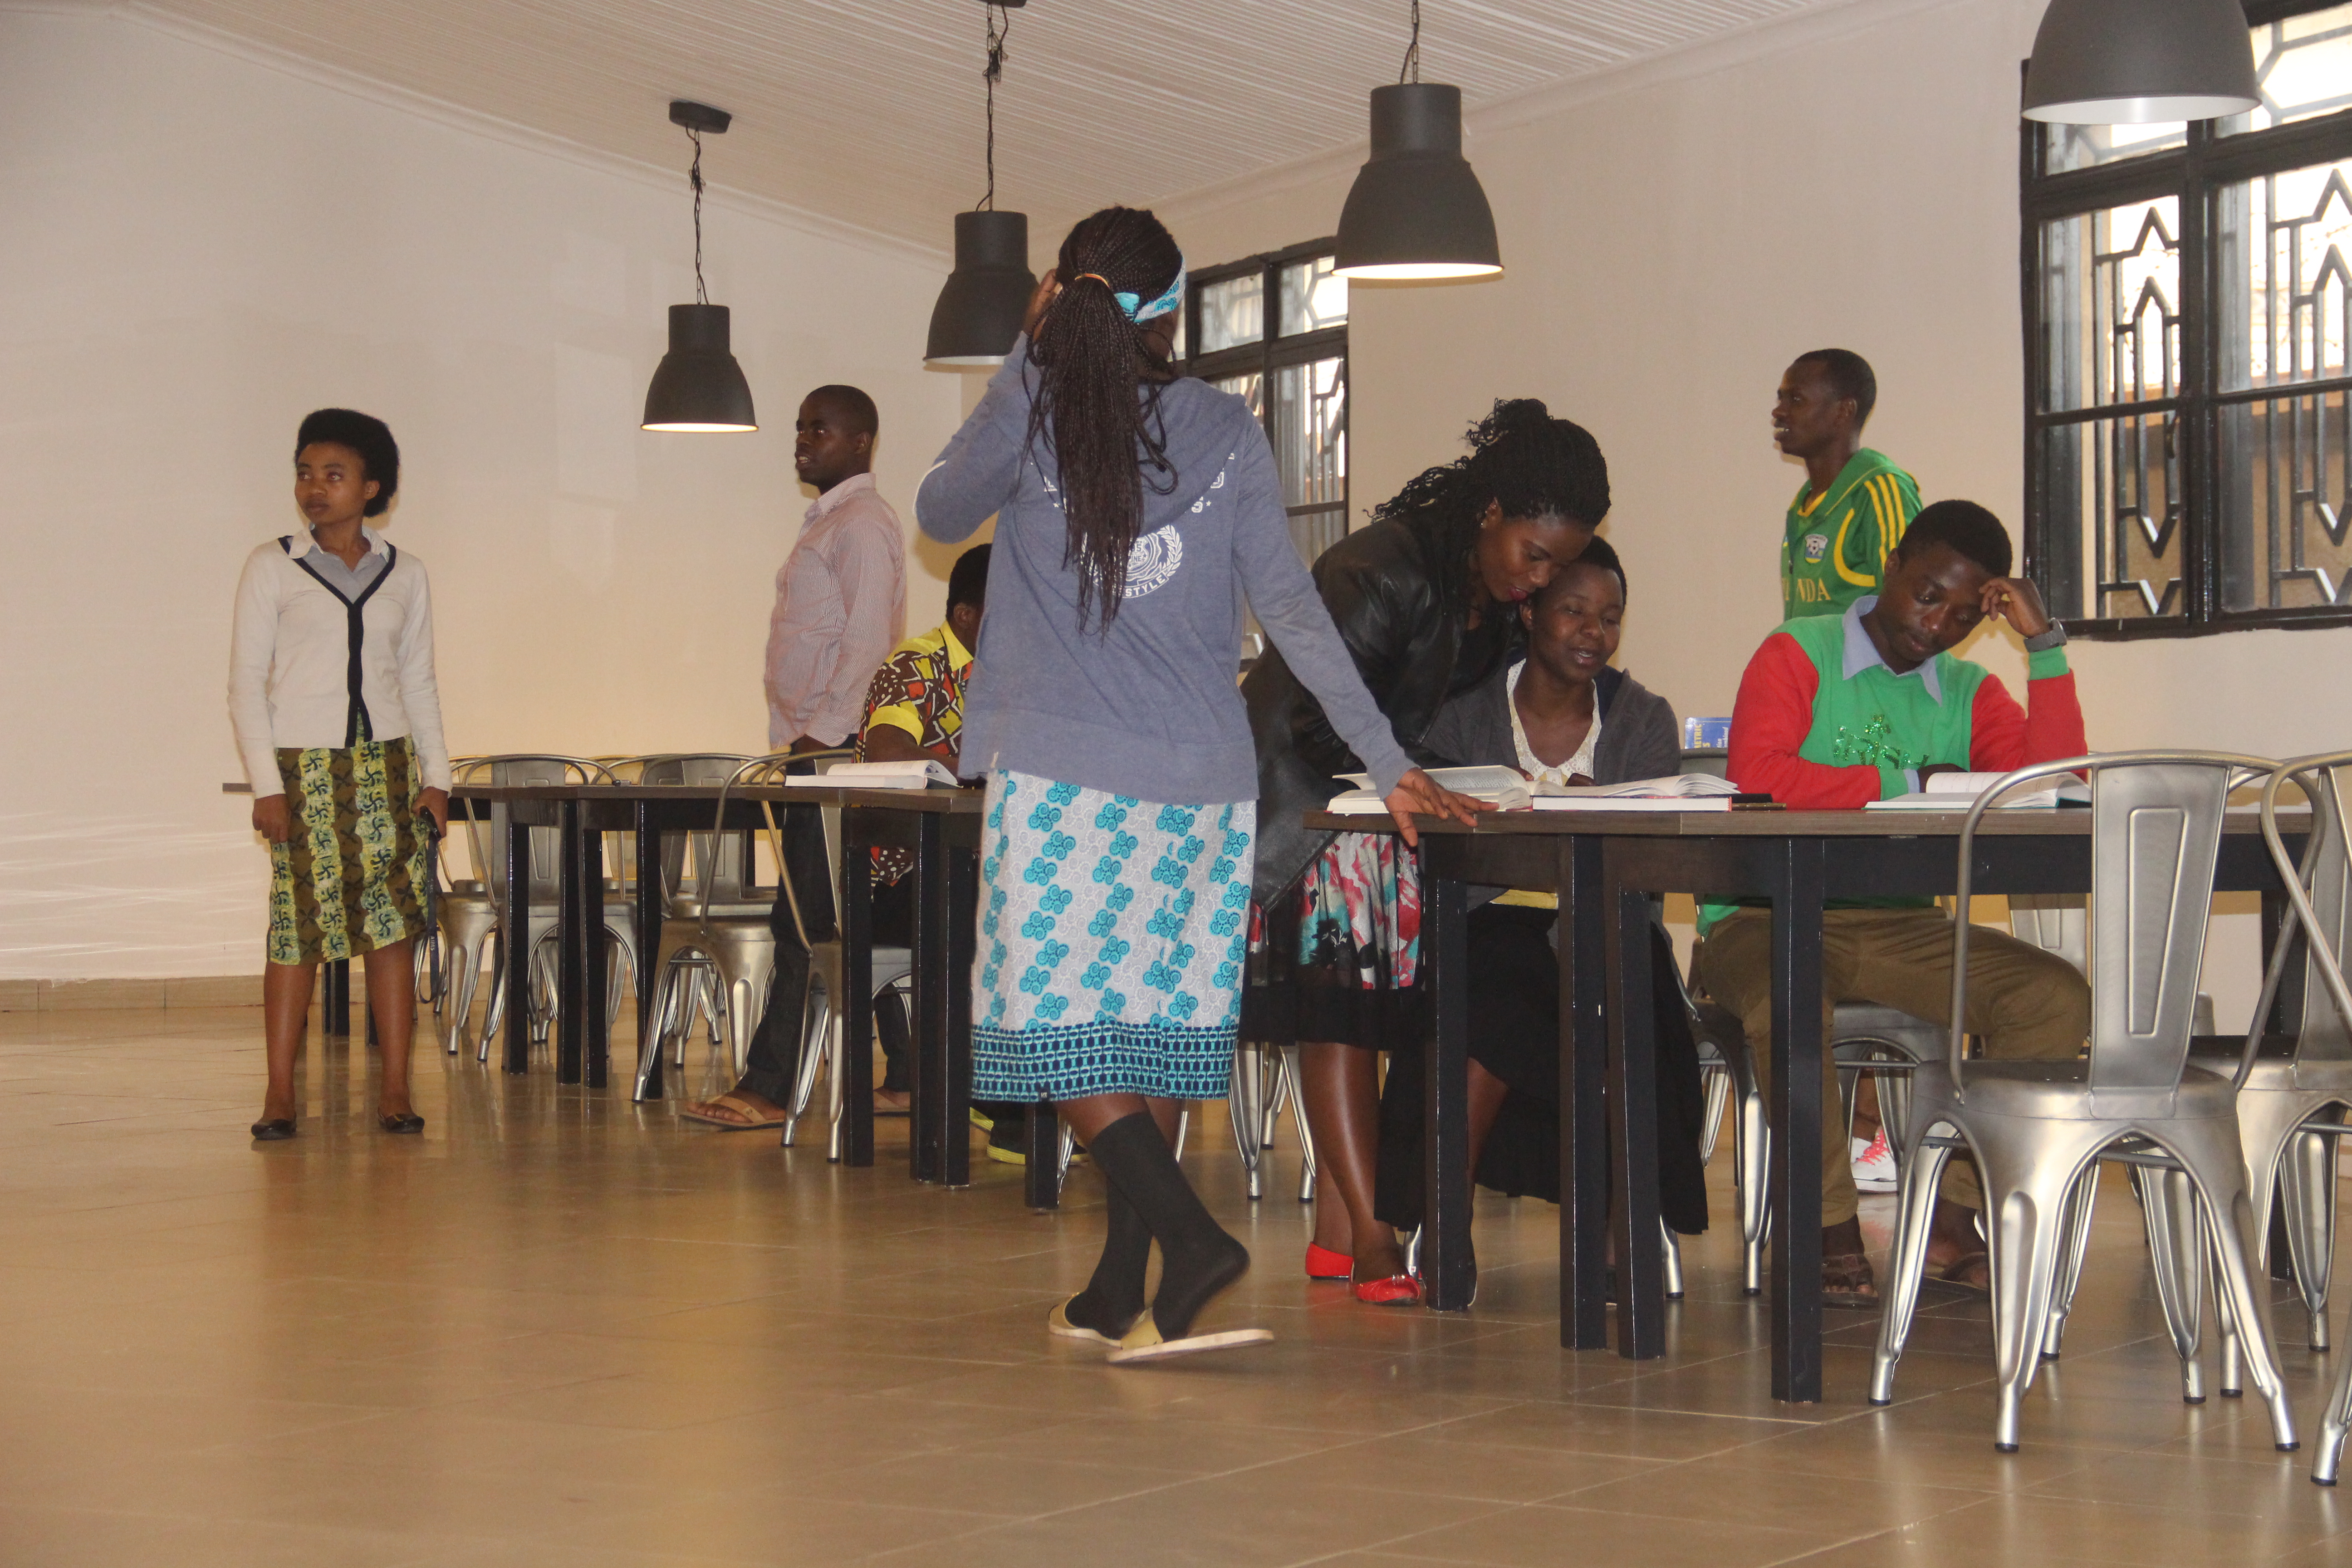 Students of AIMS Rwanda studying the donated books.